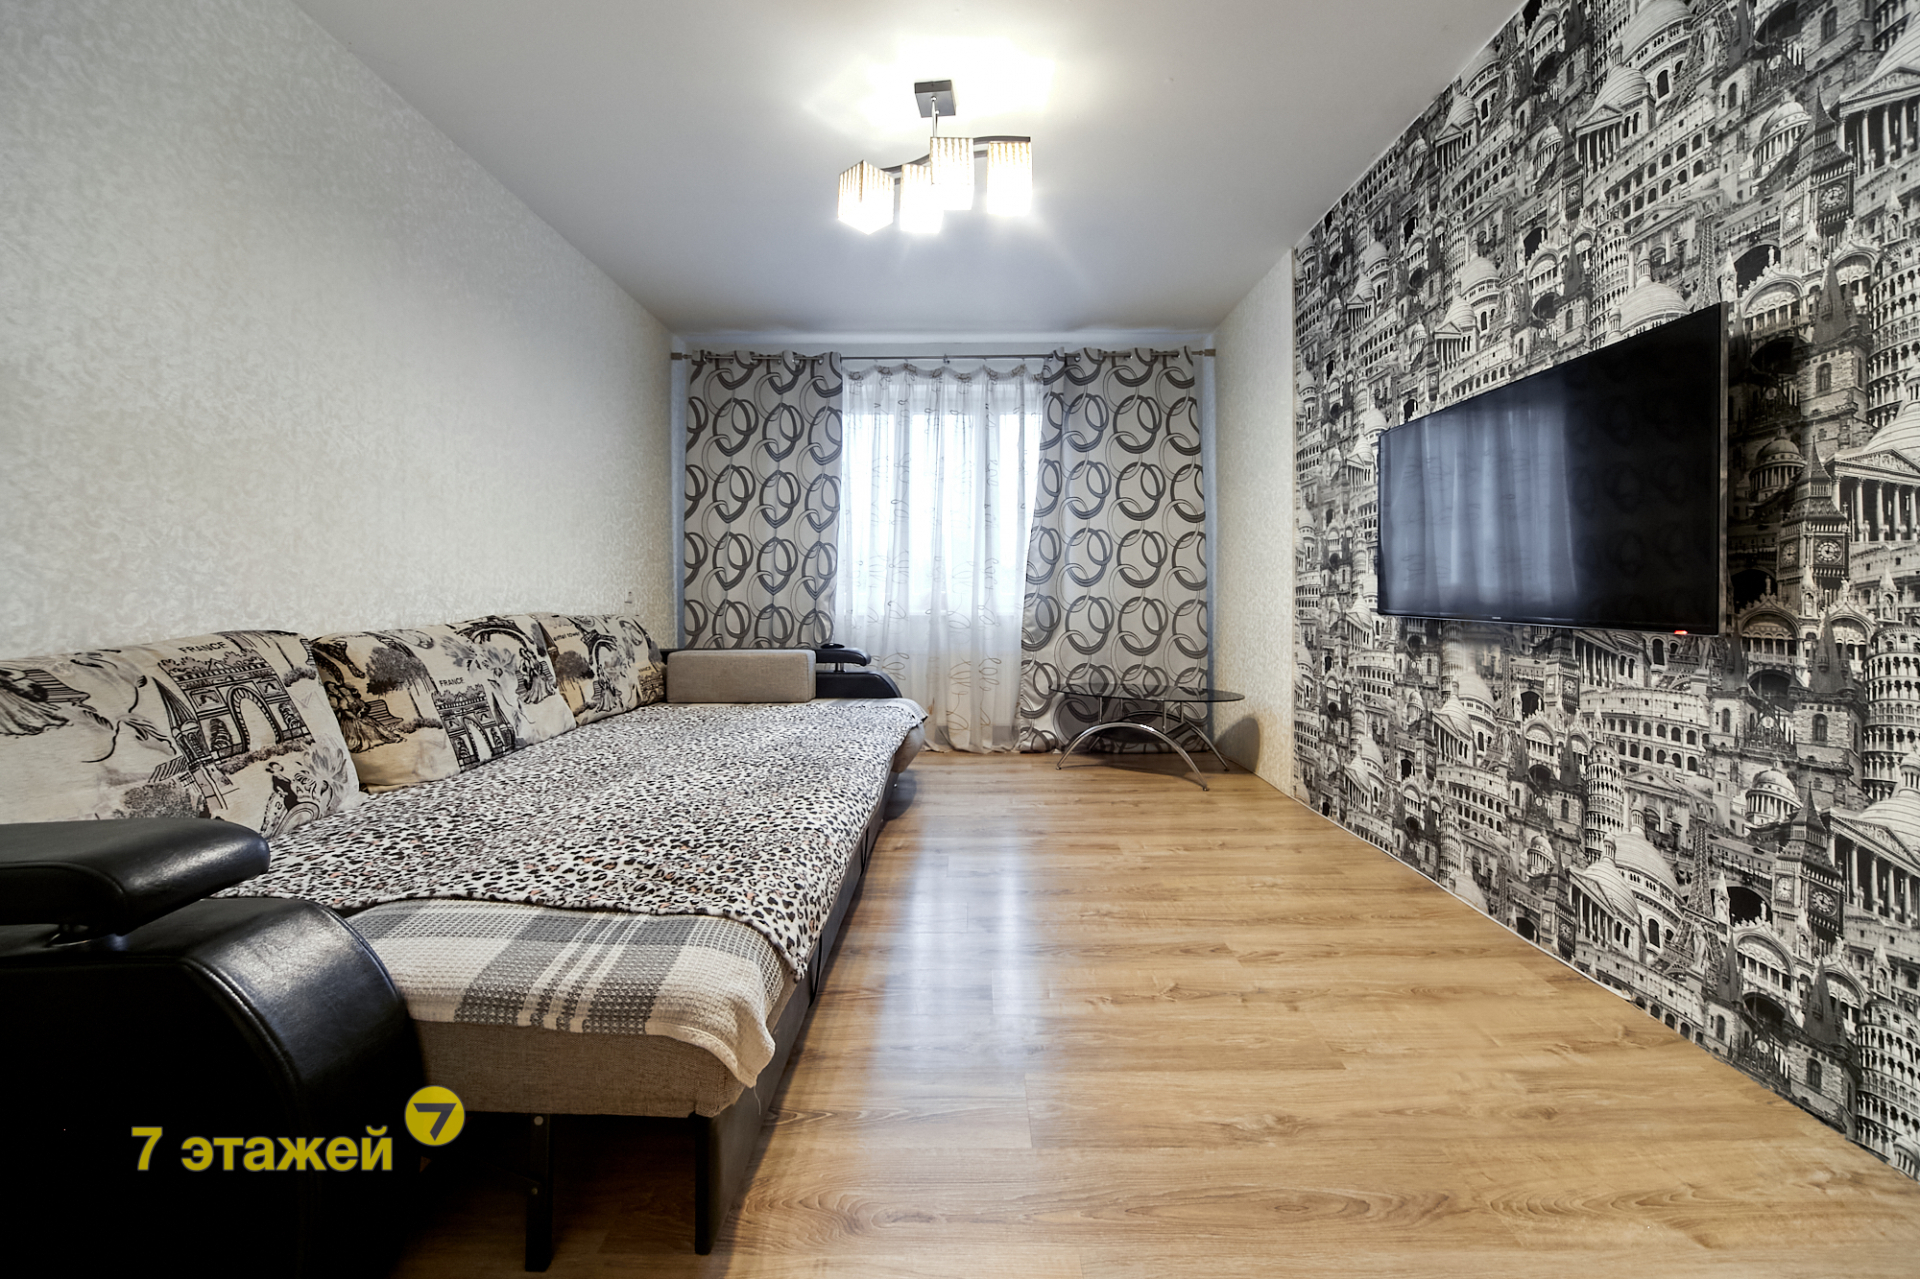 DeLore Park Hotel Domodedovo – Google для гостиниц